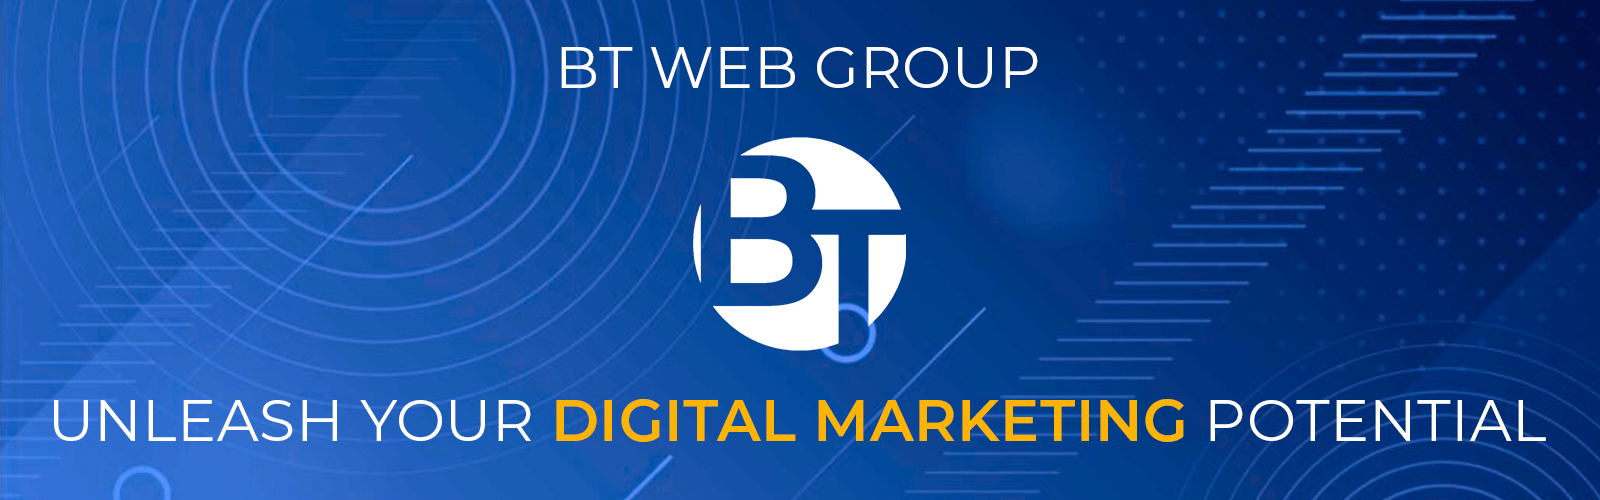 BT Web Group